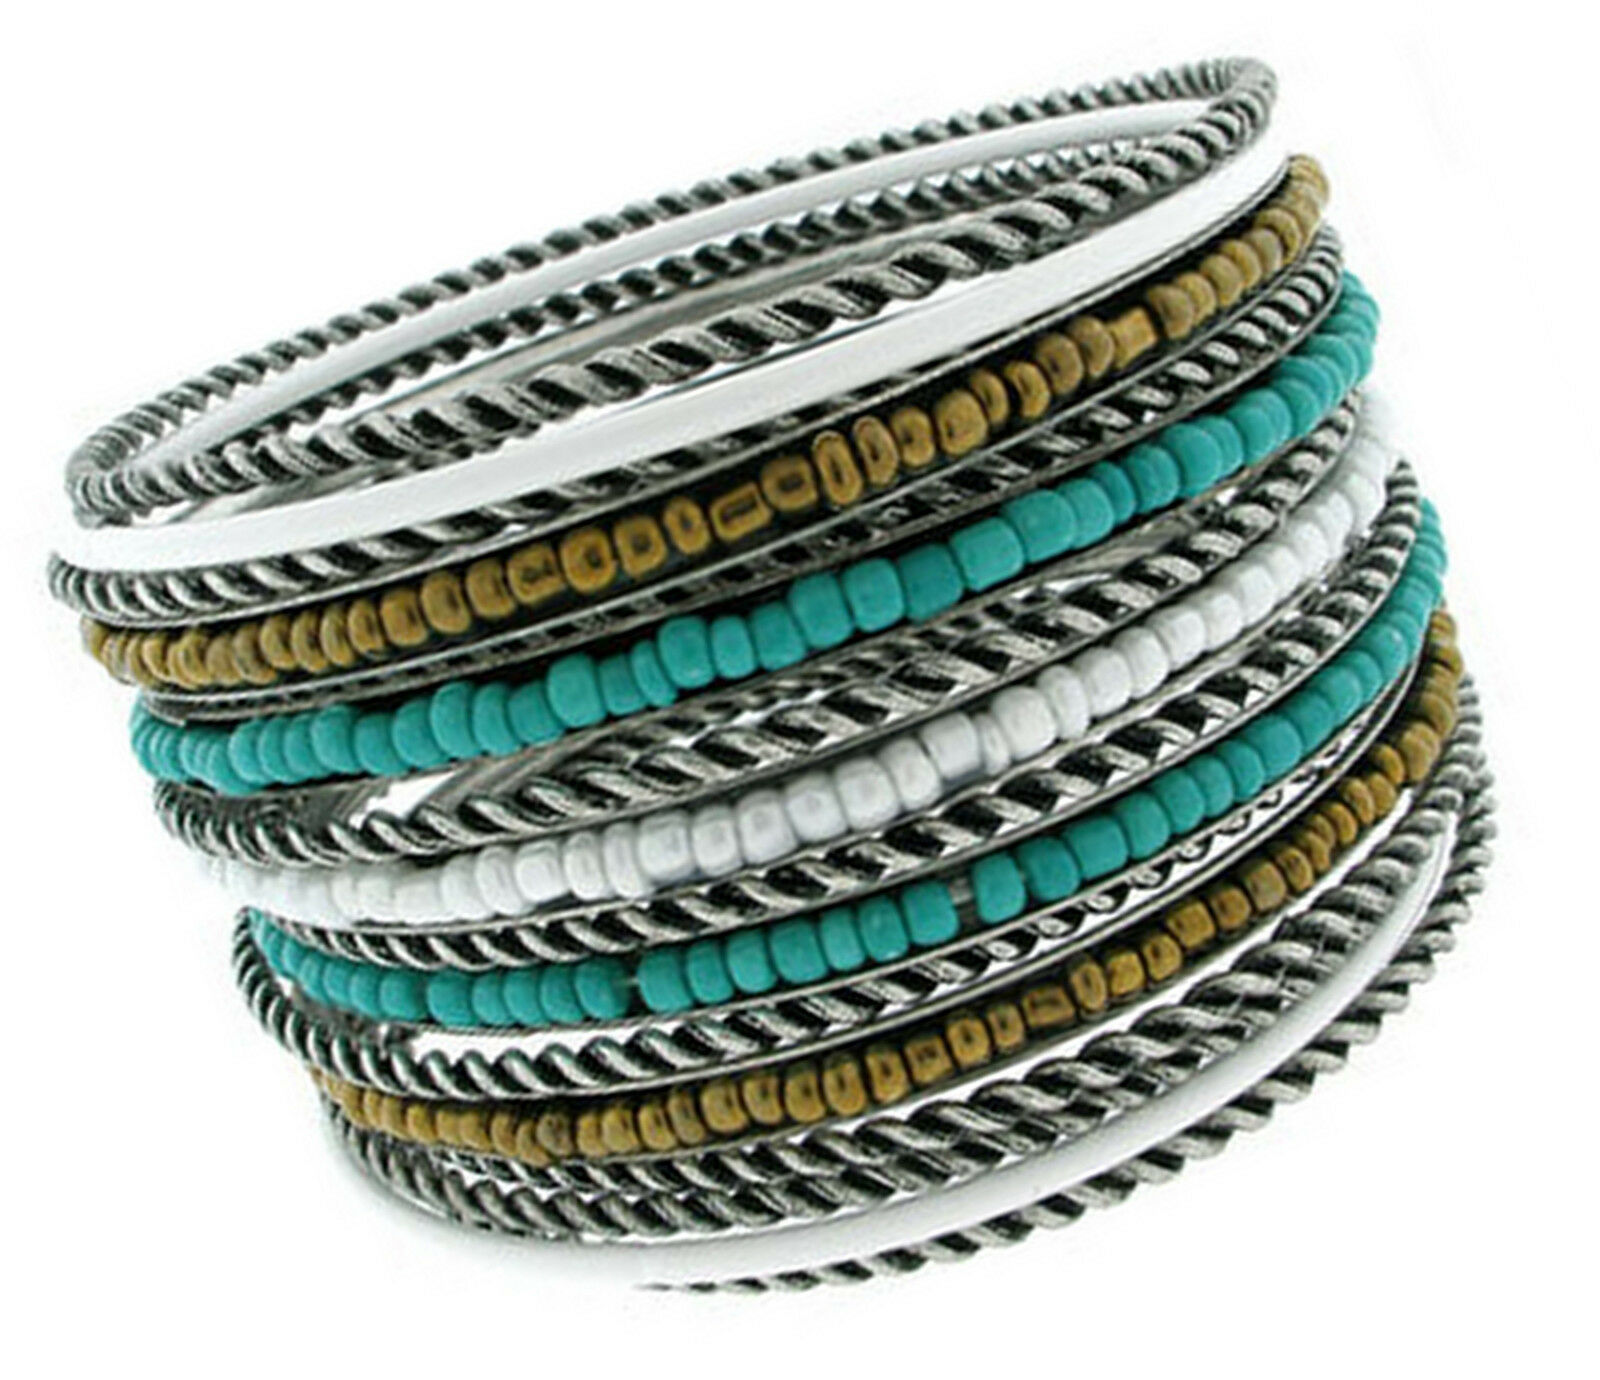 Cable Twisted Oxidized Silver Seed Bead Turquoise White Bangle Bracelet Set 15 - $14.95